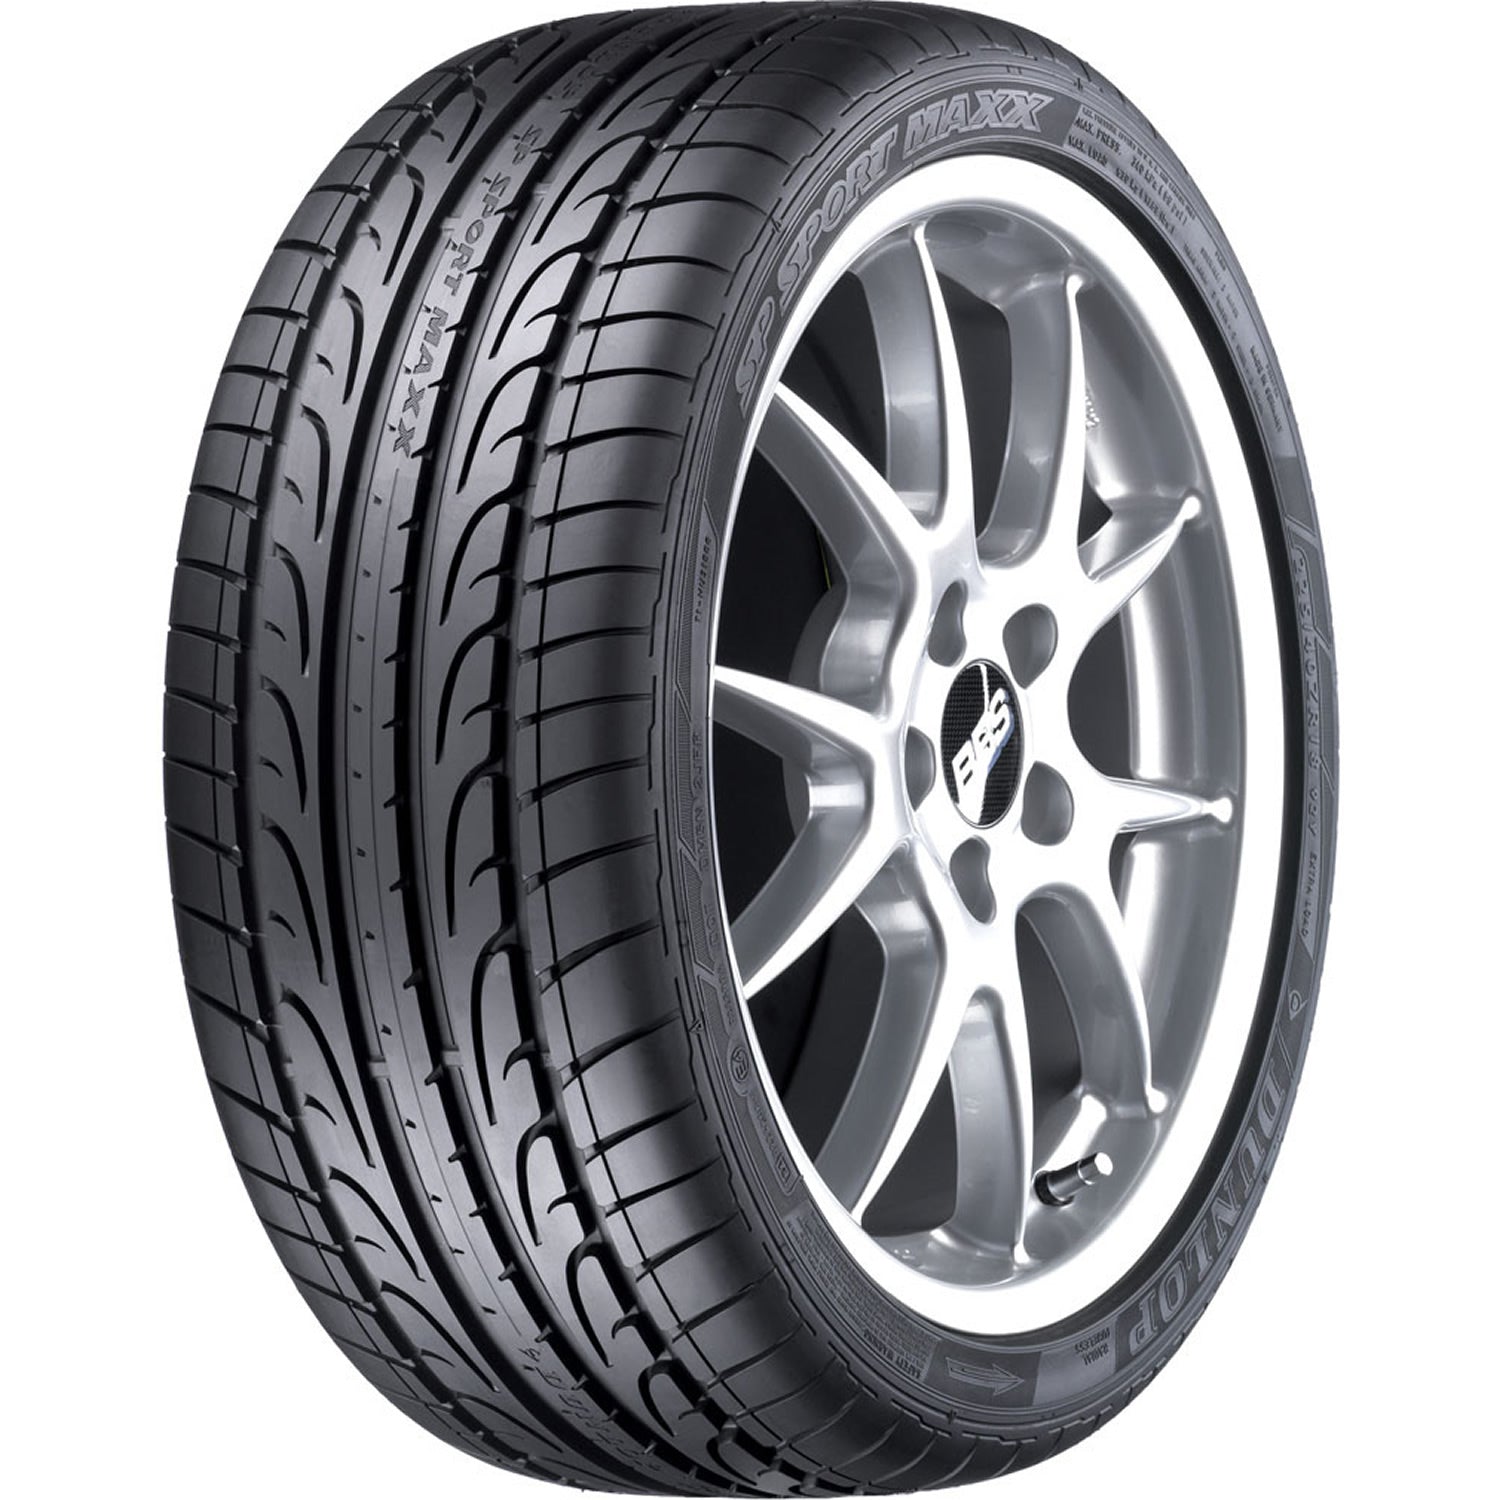 DUNLOP SP SPORT MAXX 275/55R19 (30.9X11.2R 19) Tires